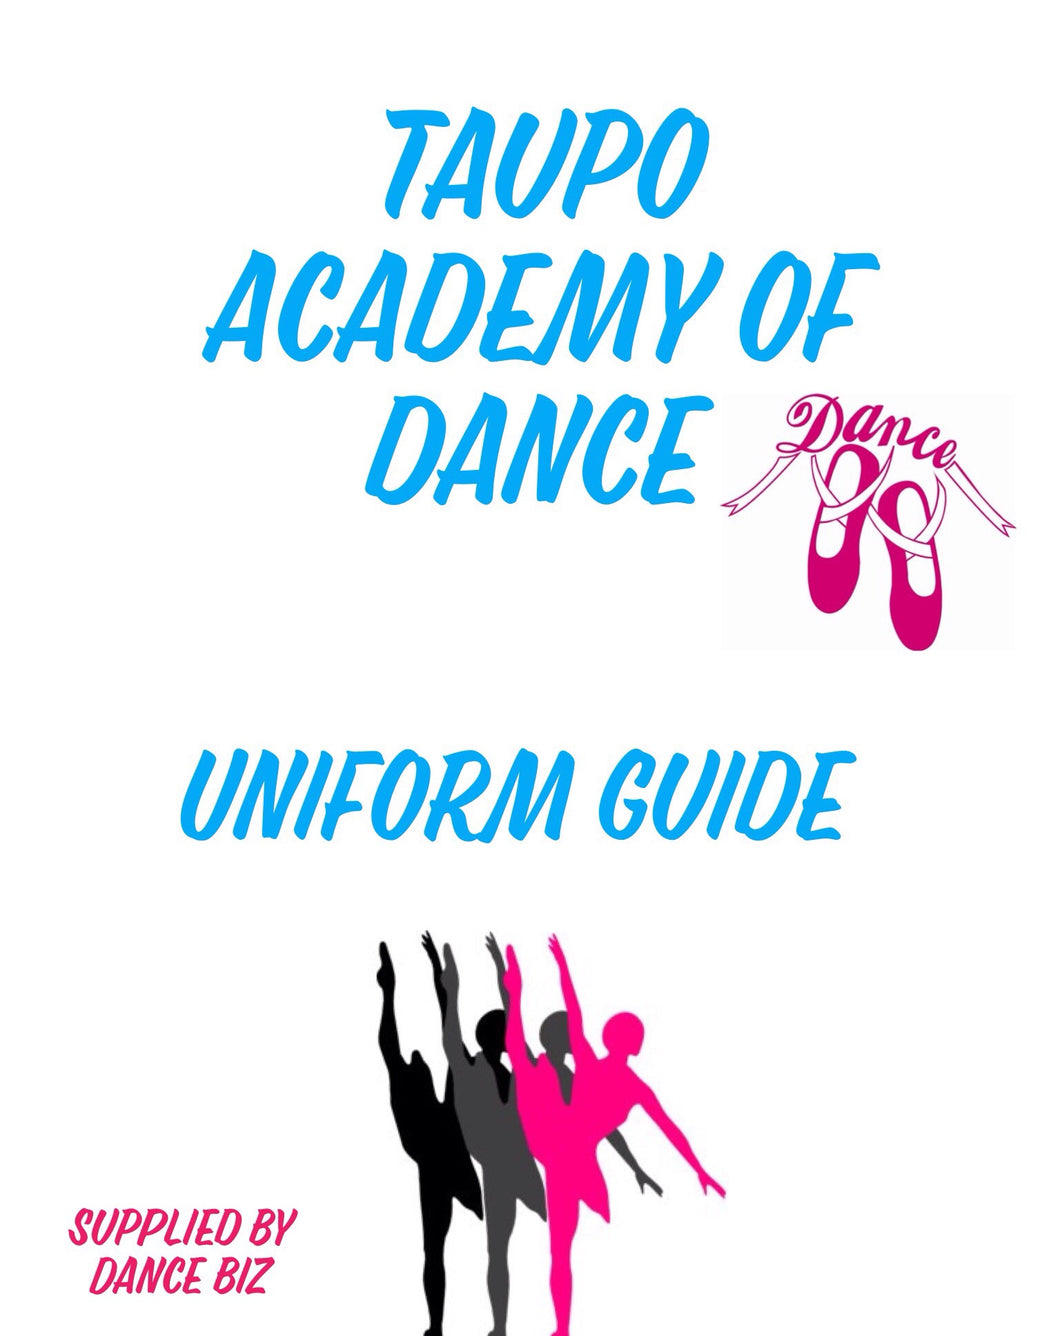 Taupo Academy of Dance - Jazz Uniforms